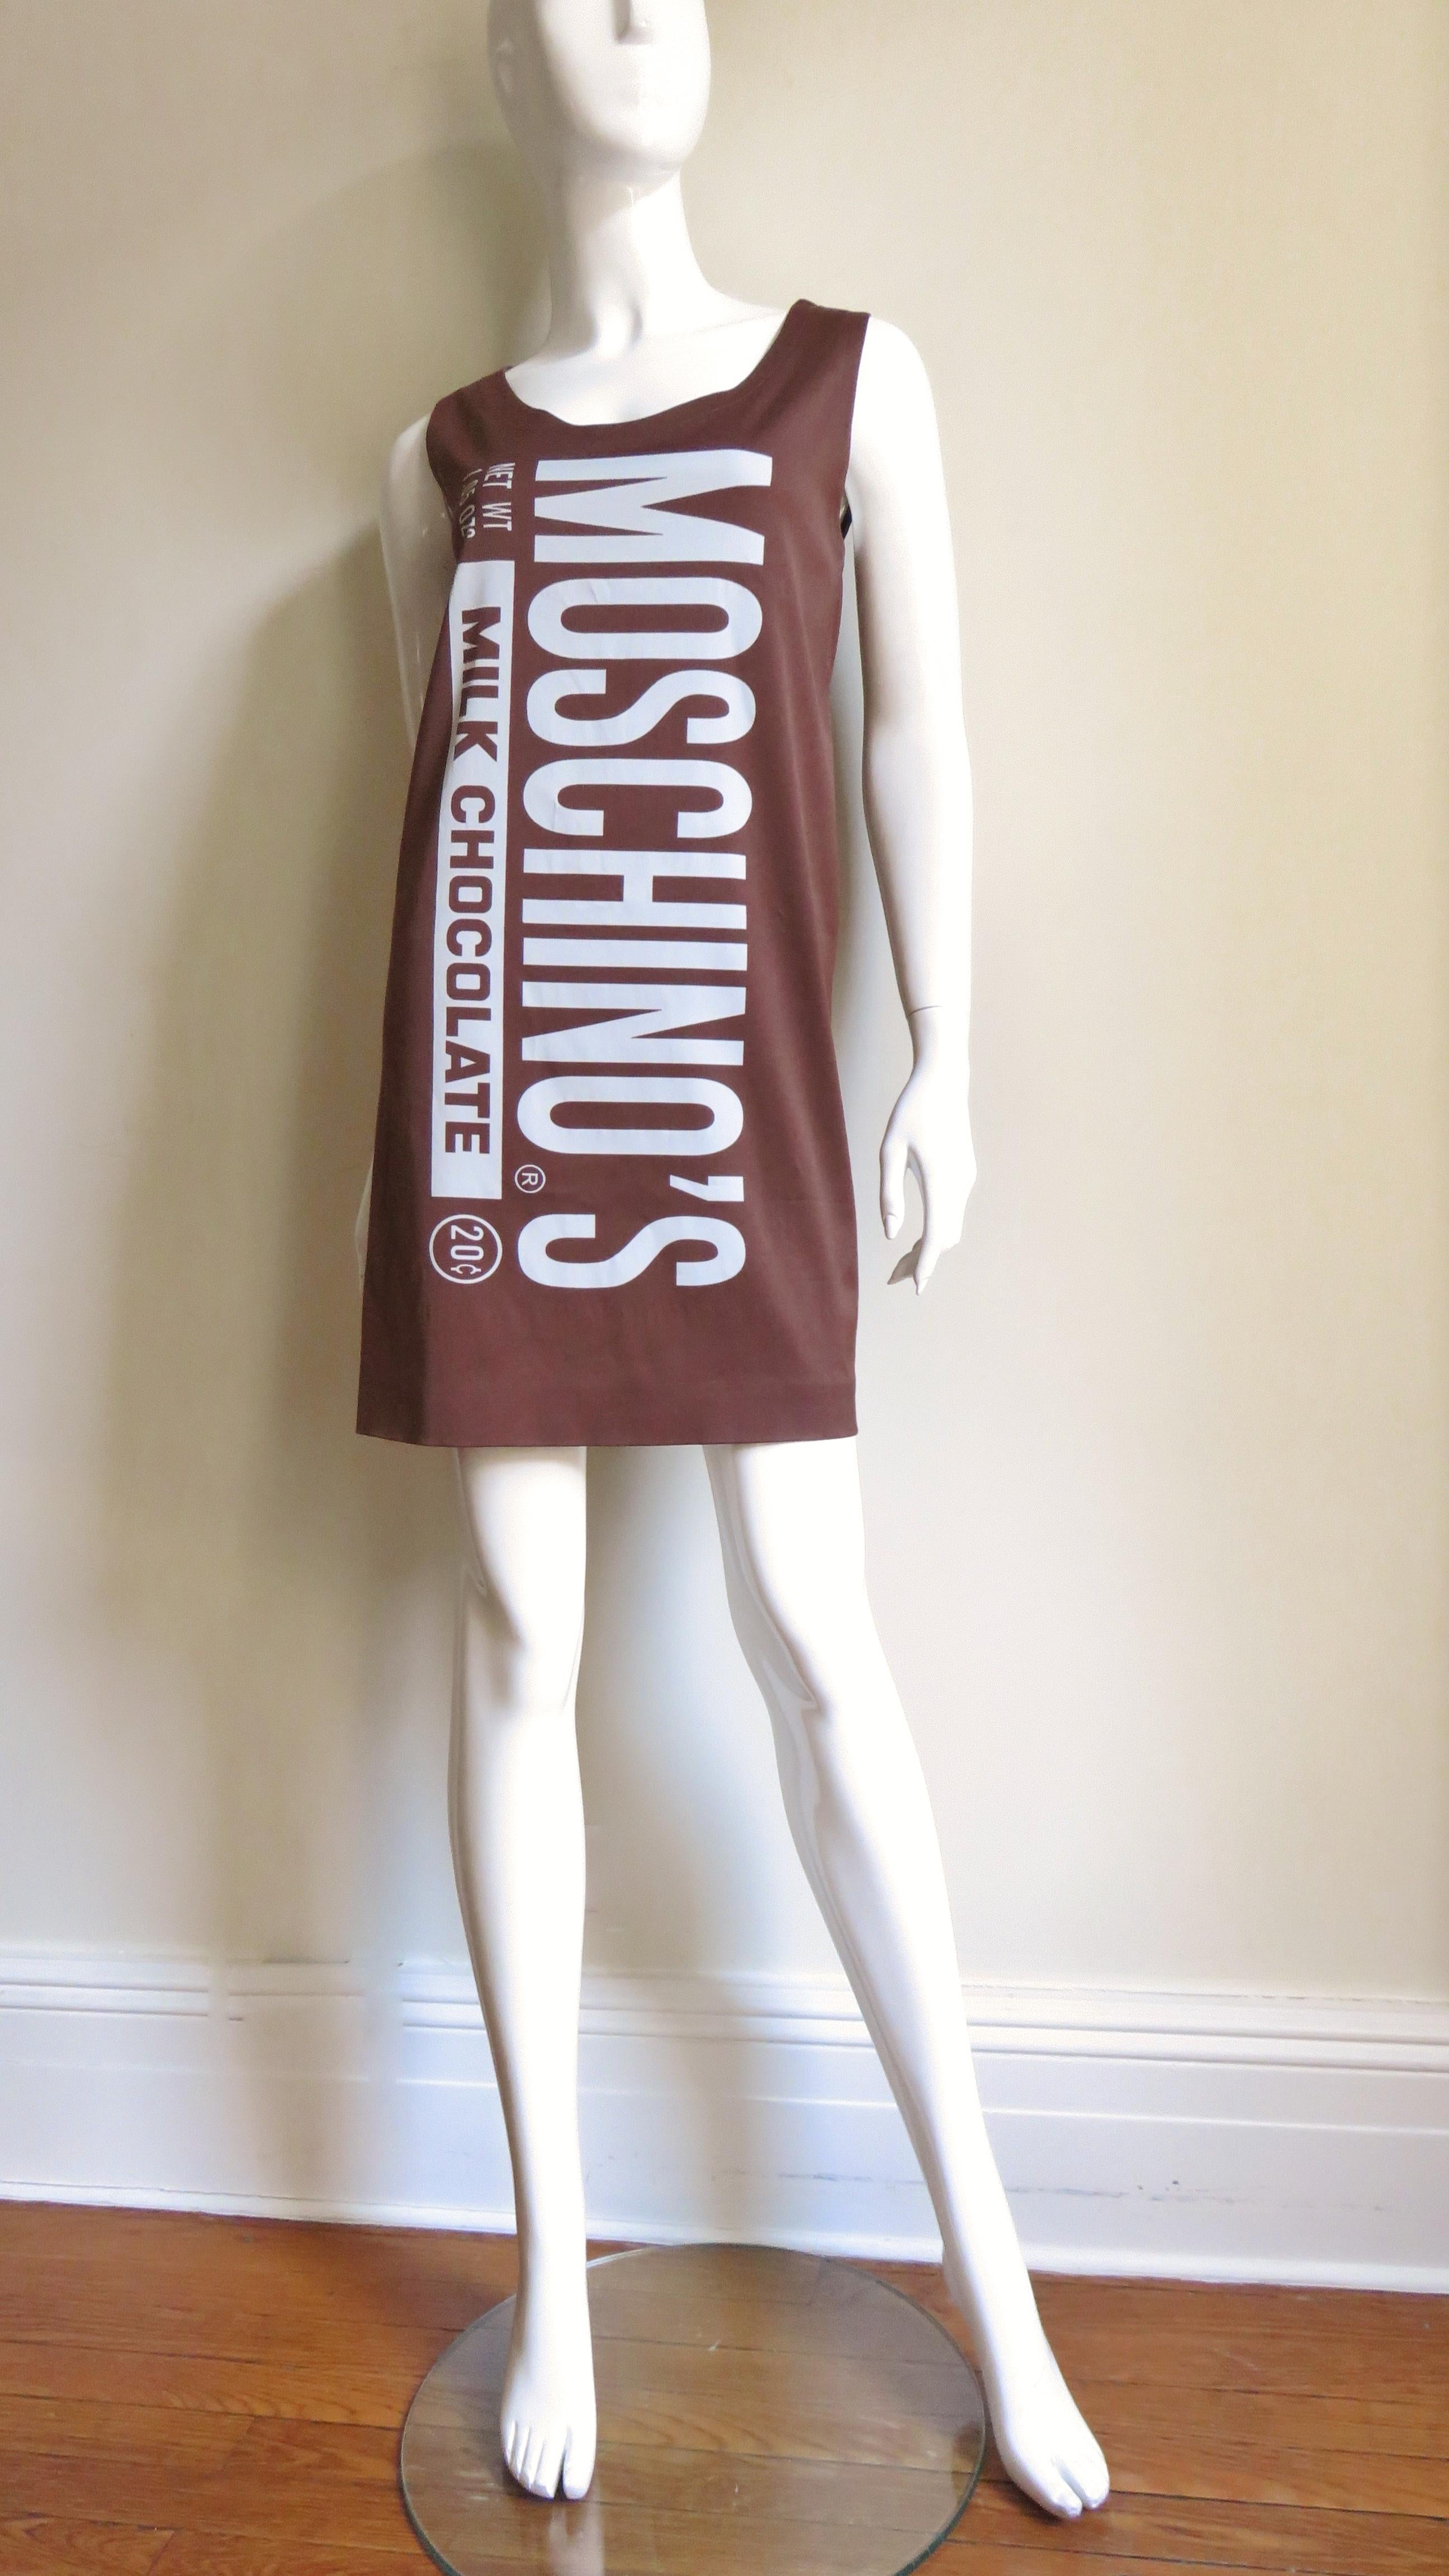 Jeremy Scott Moschino Chocolate Bar Dress 1